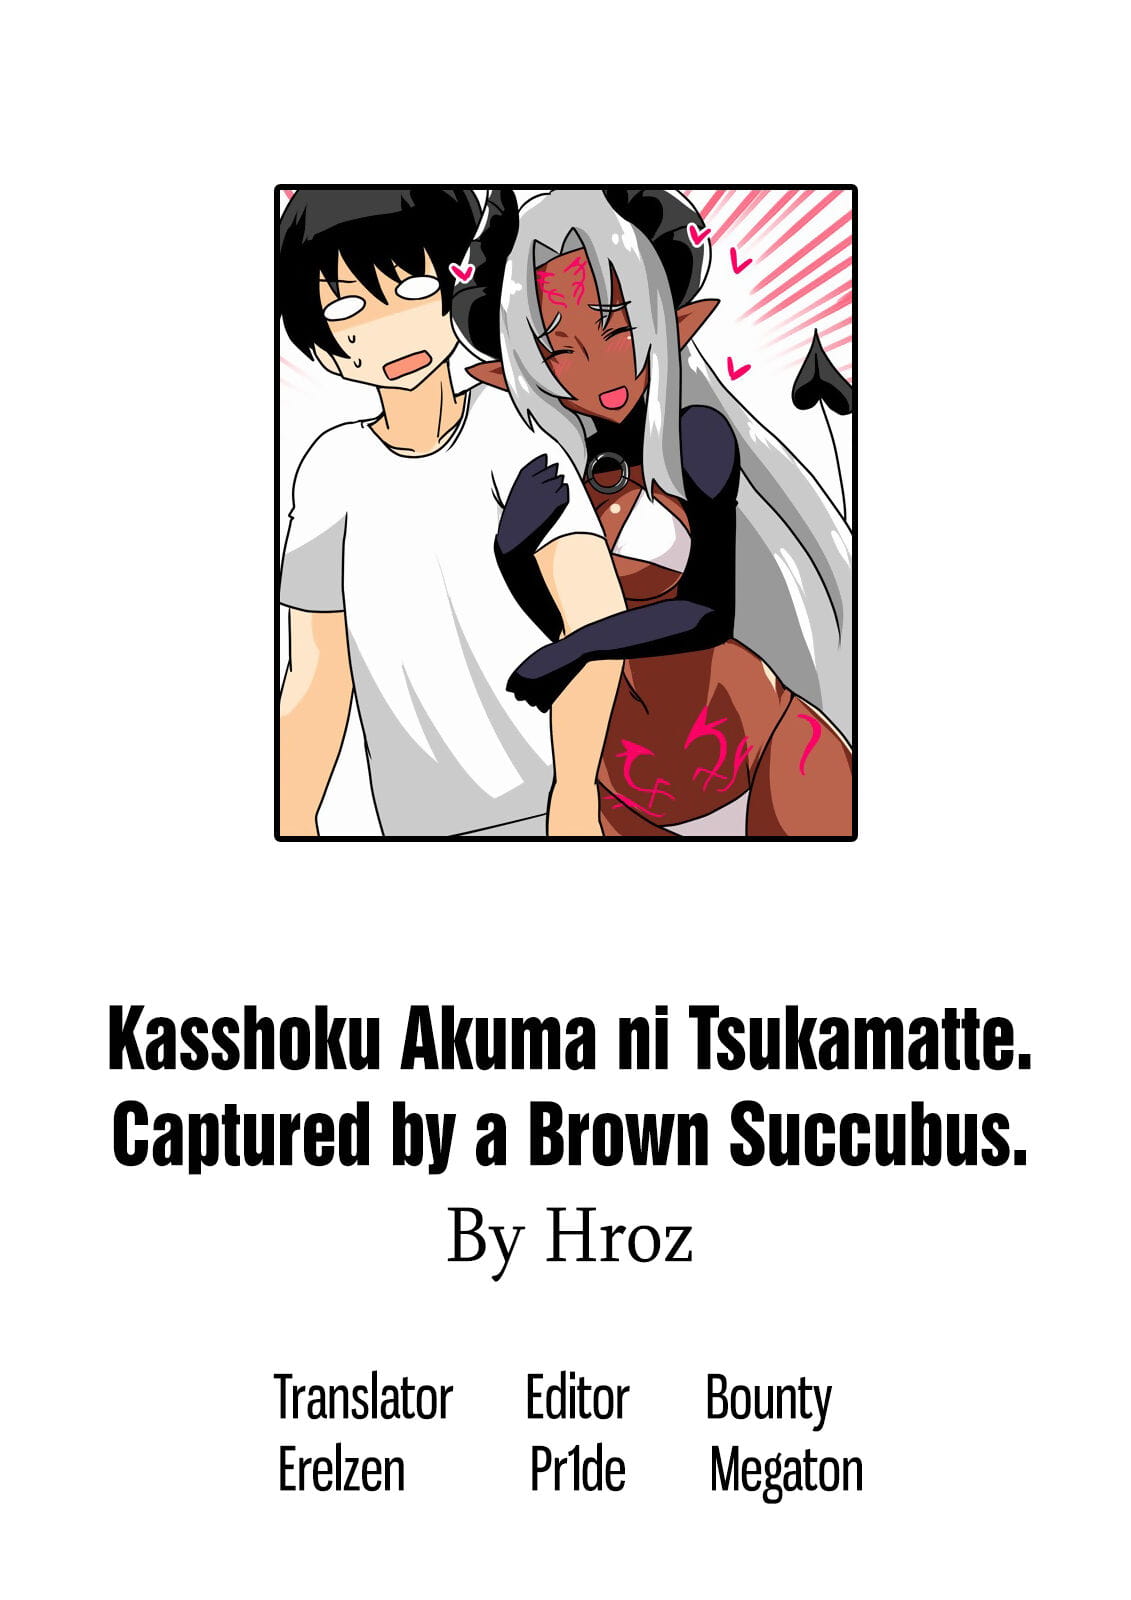 kasshoku akuma नी tsukamatte. पर कब्जा कर लिया :द्वारा: एक ब्राउन succubus page 1